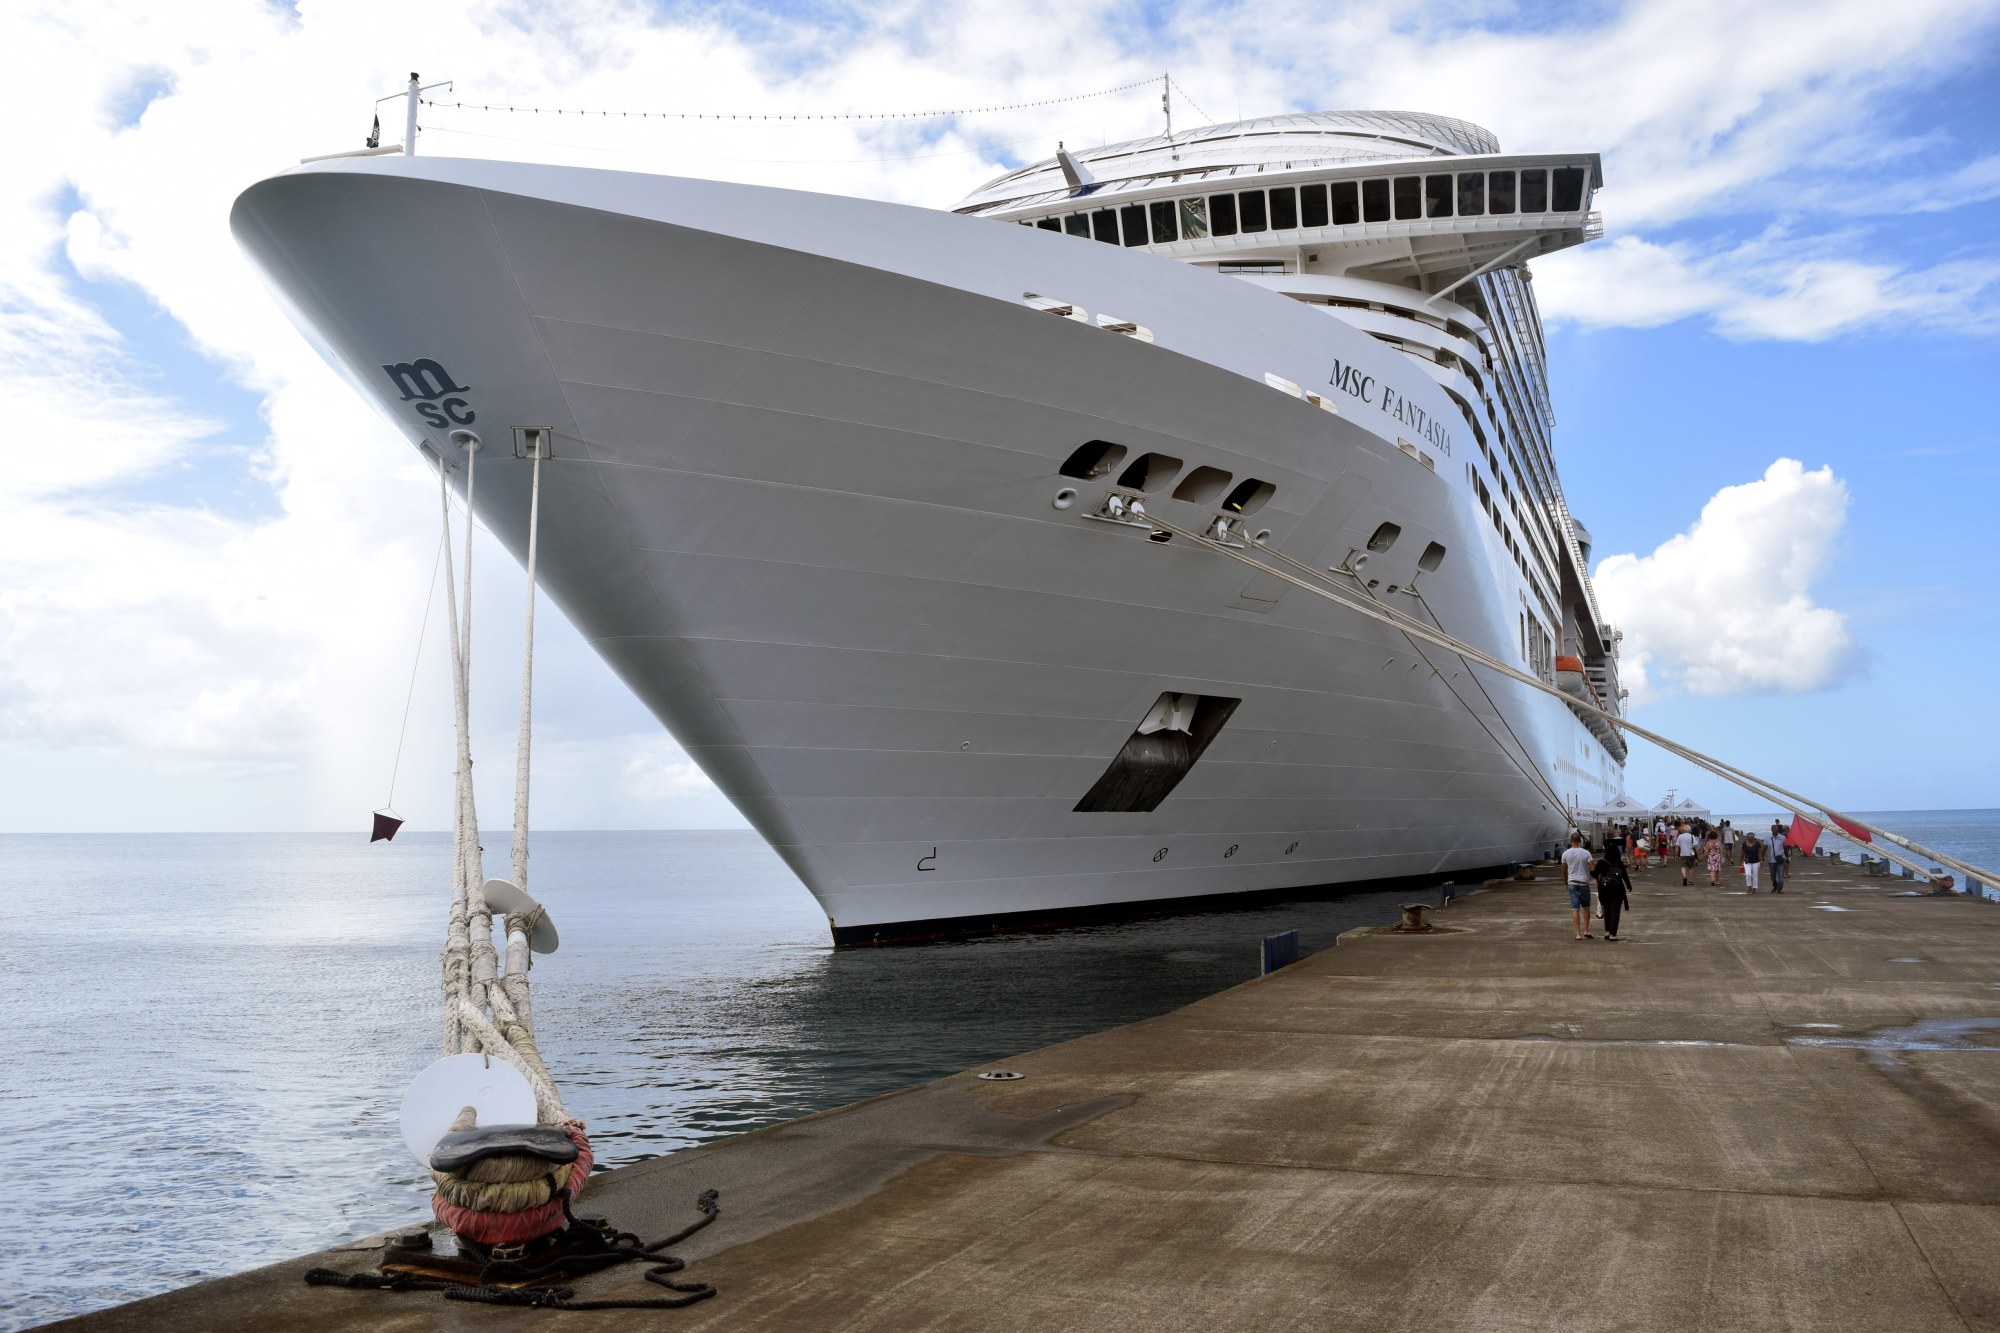 The MSC Fantasia docked somewhere in the Caribbean.